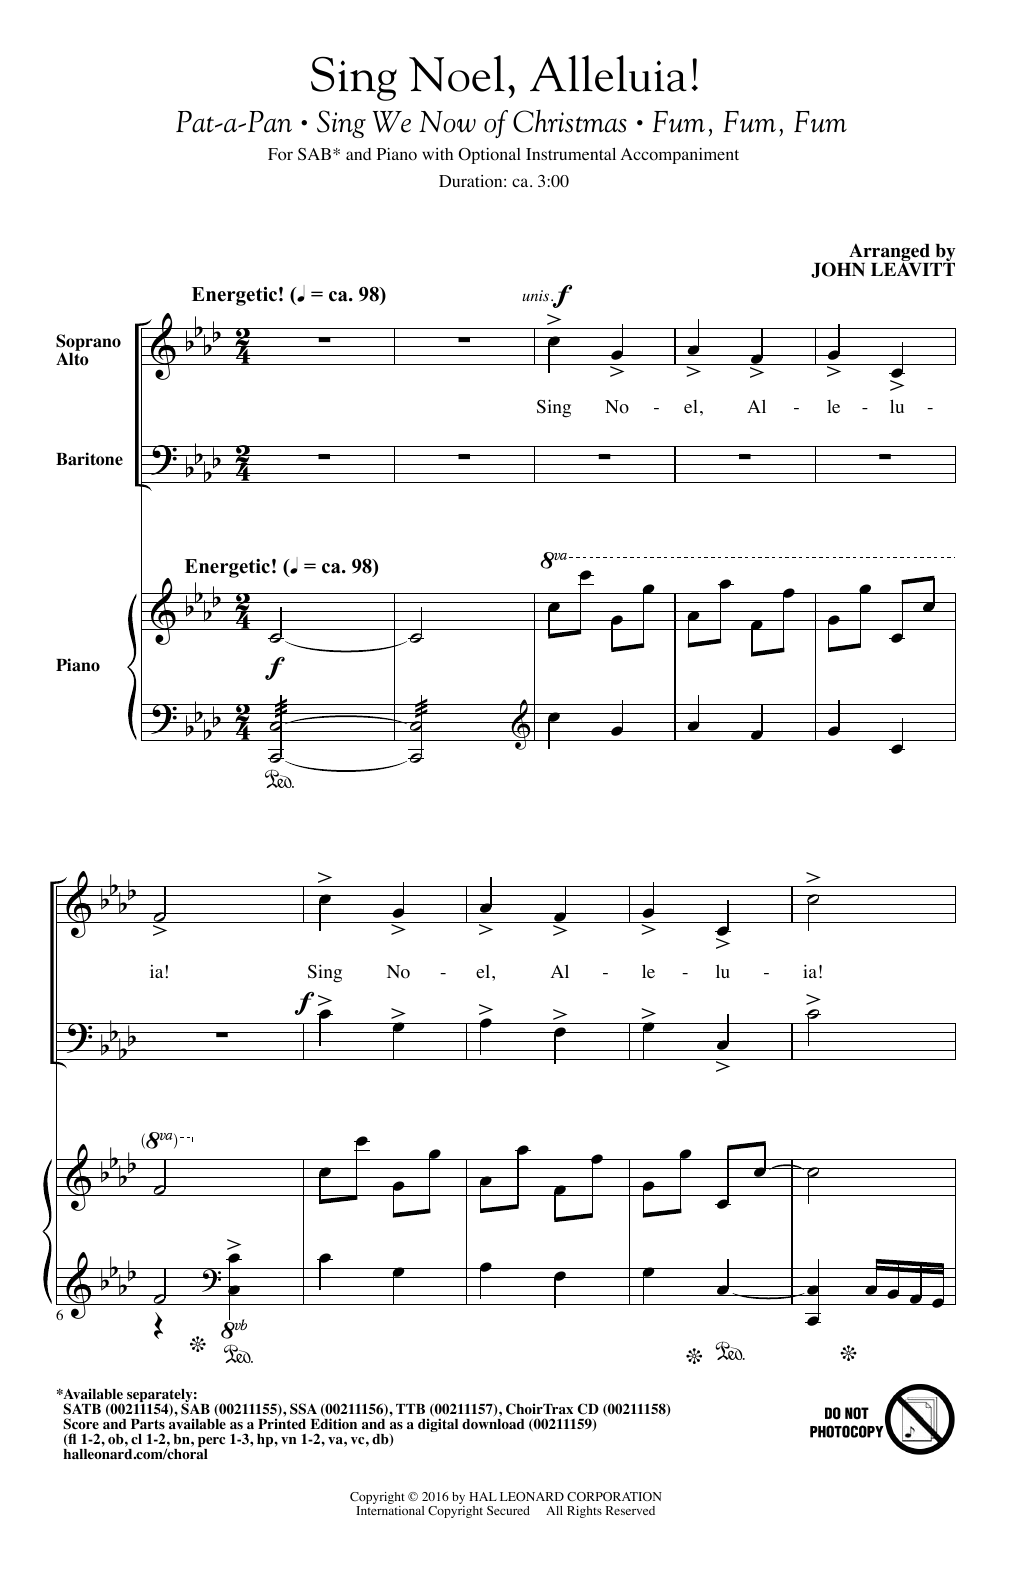 John Leavitt Sing Noel, Alleluia! sheet music notes and chords arranged for SAB Choir